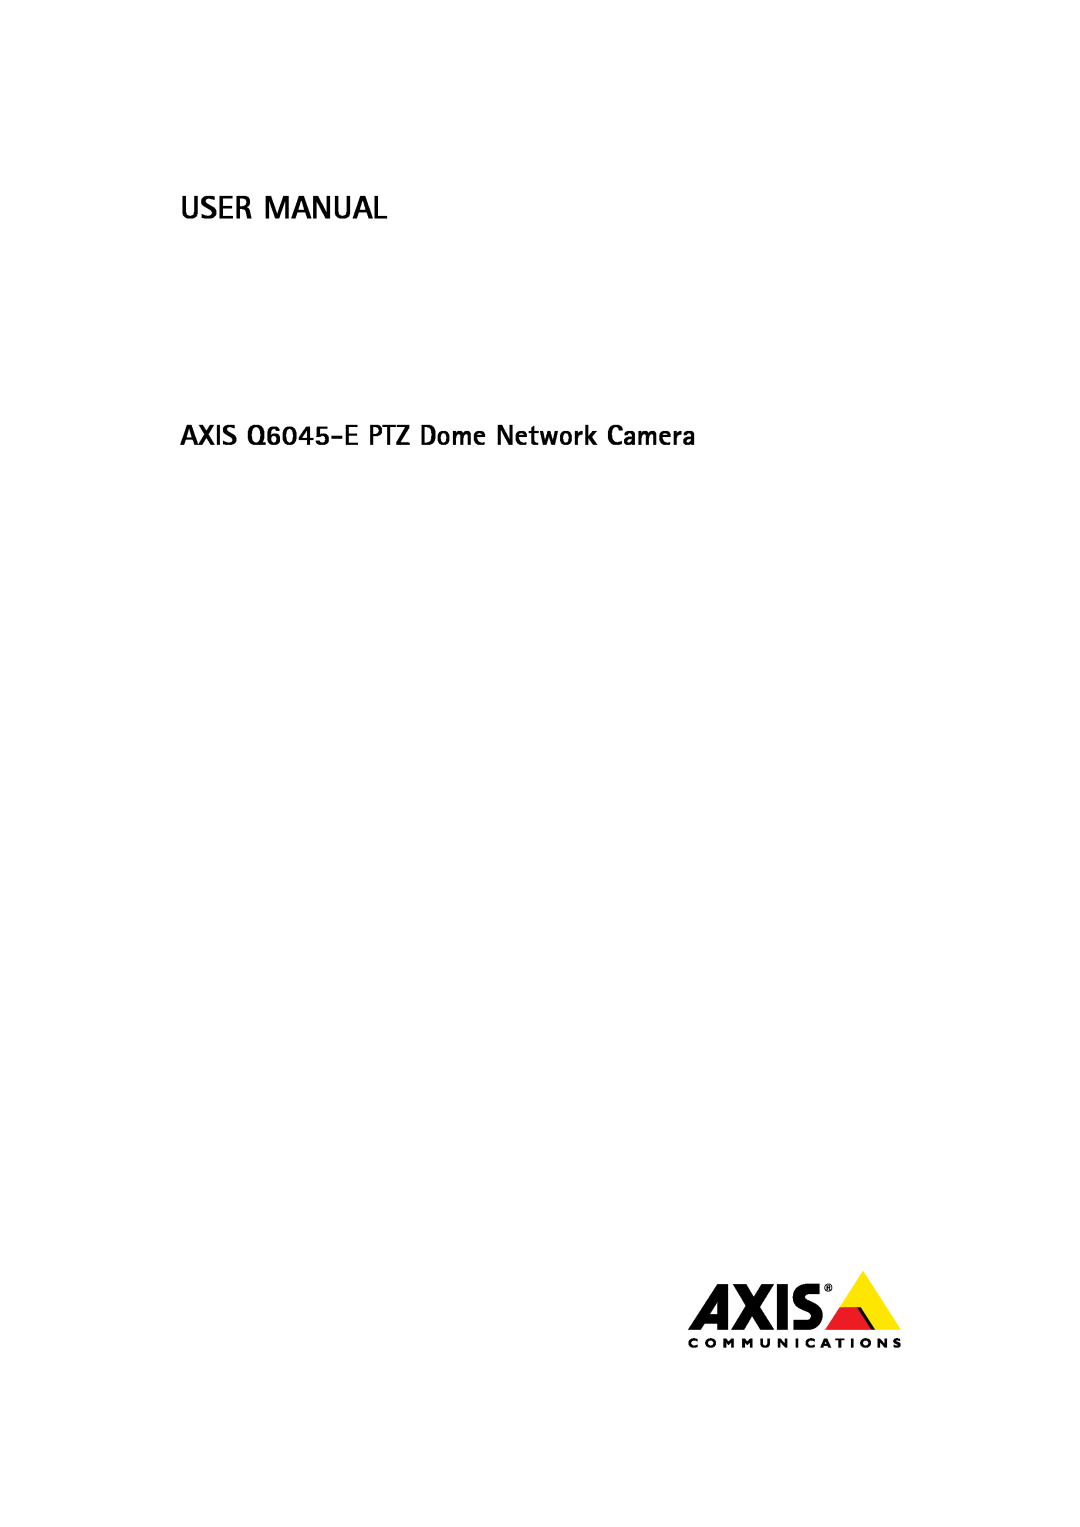 Axis Communications Q6044-E, Q6045-E manual AXIS Q60 Series, AXIS Q6042-EPTZ Dome Network Camera, Installation Guide 